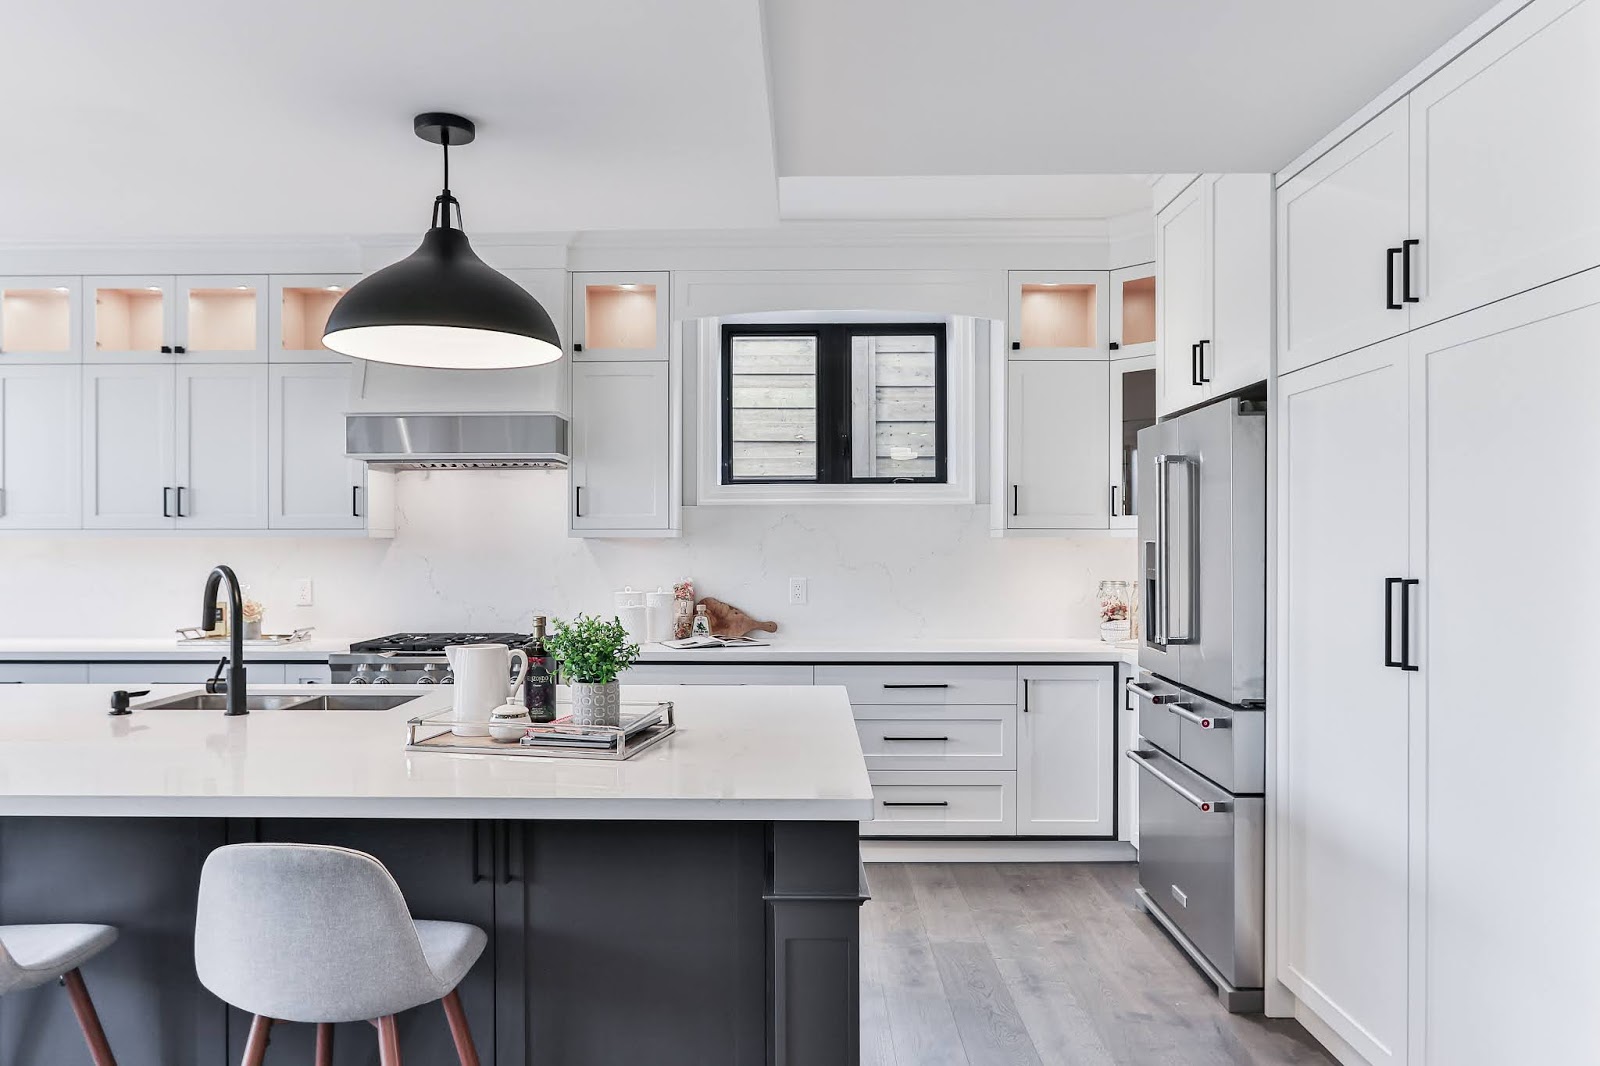 10 Model Desain Dapur Minimalis Modern Dengan Kitchen Set Terbaru 2021 NDekorRumah